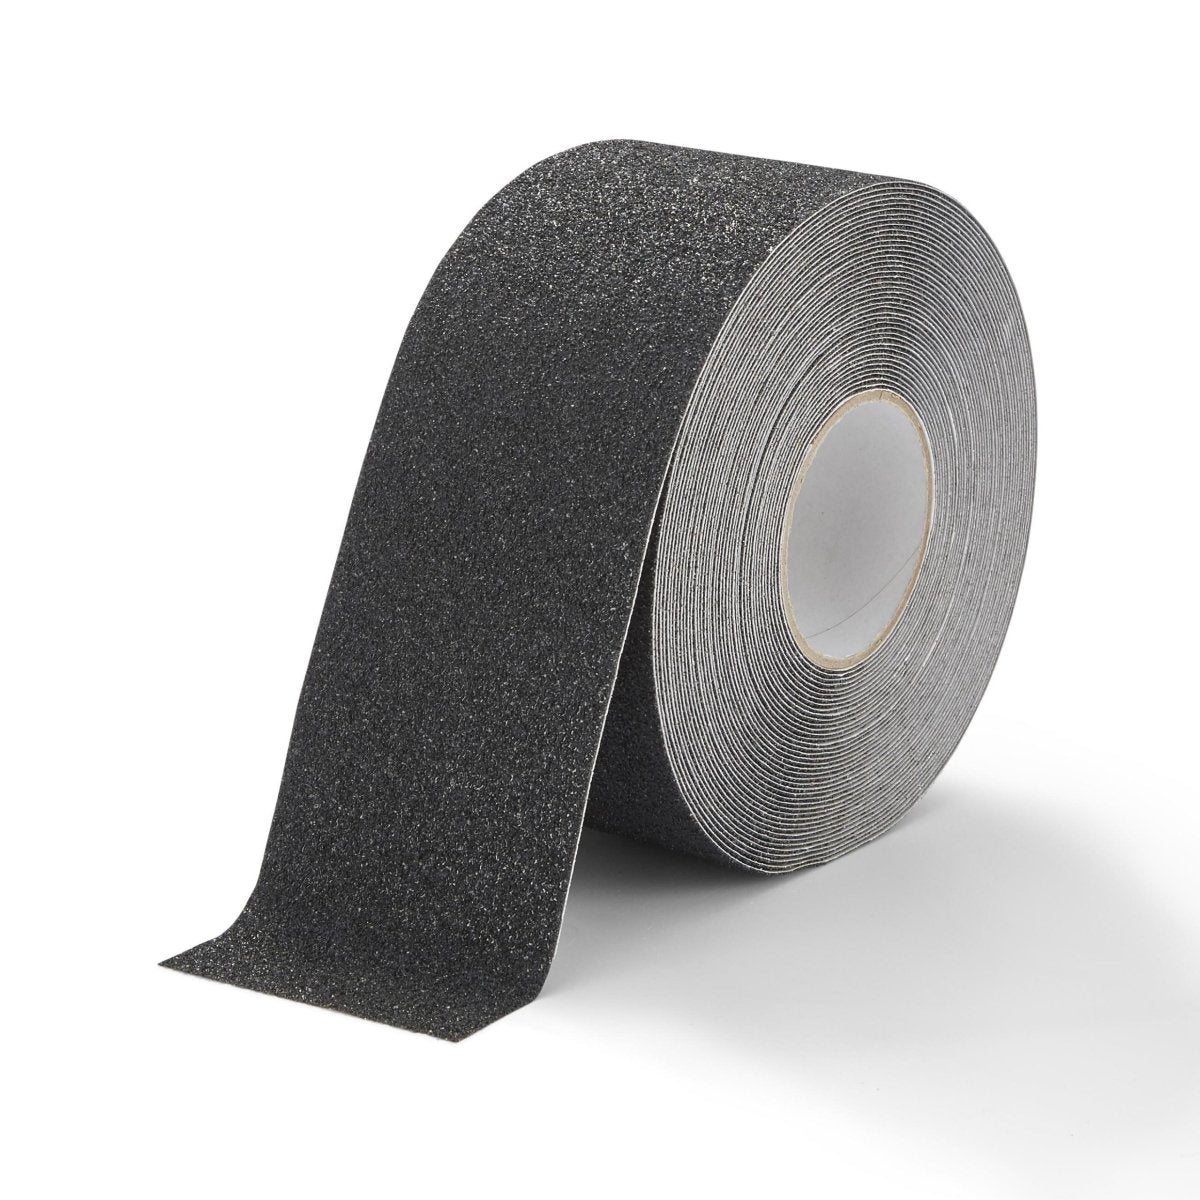 Extra Course Grade Anti Slip Tape Rolls 18m - Slips Away - H3402NUC-Extra-Coarse-Safety-Grip-Black-100mm -